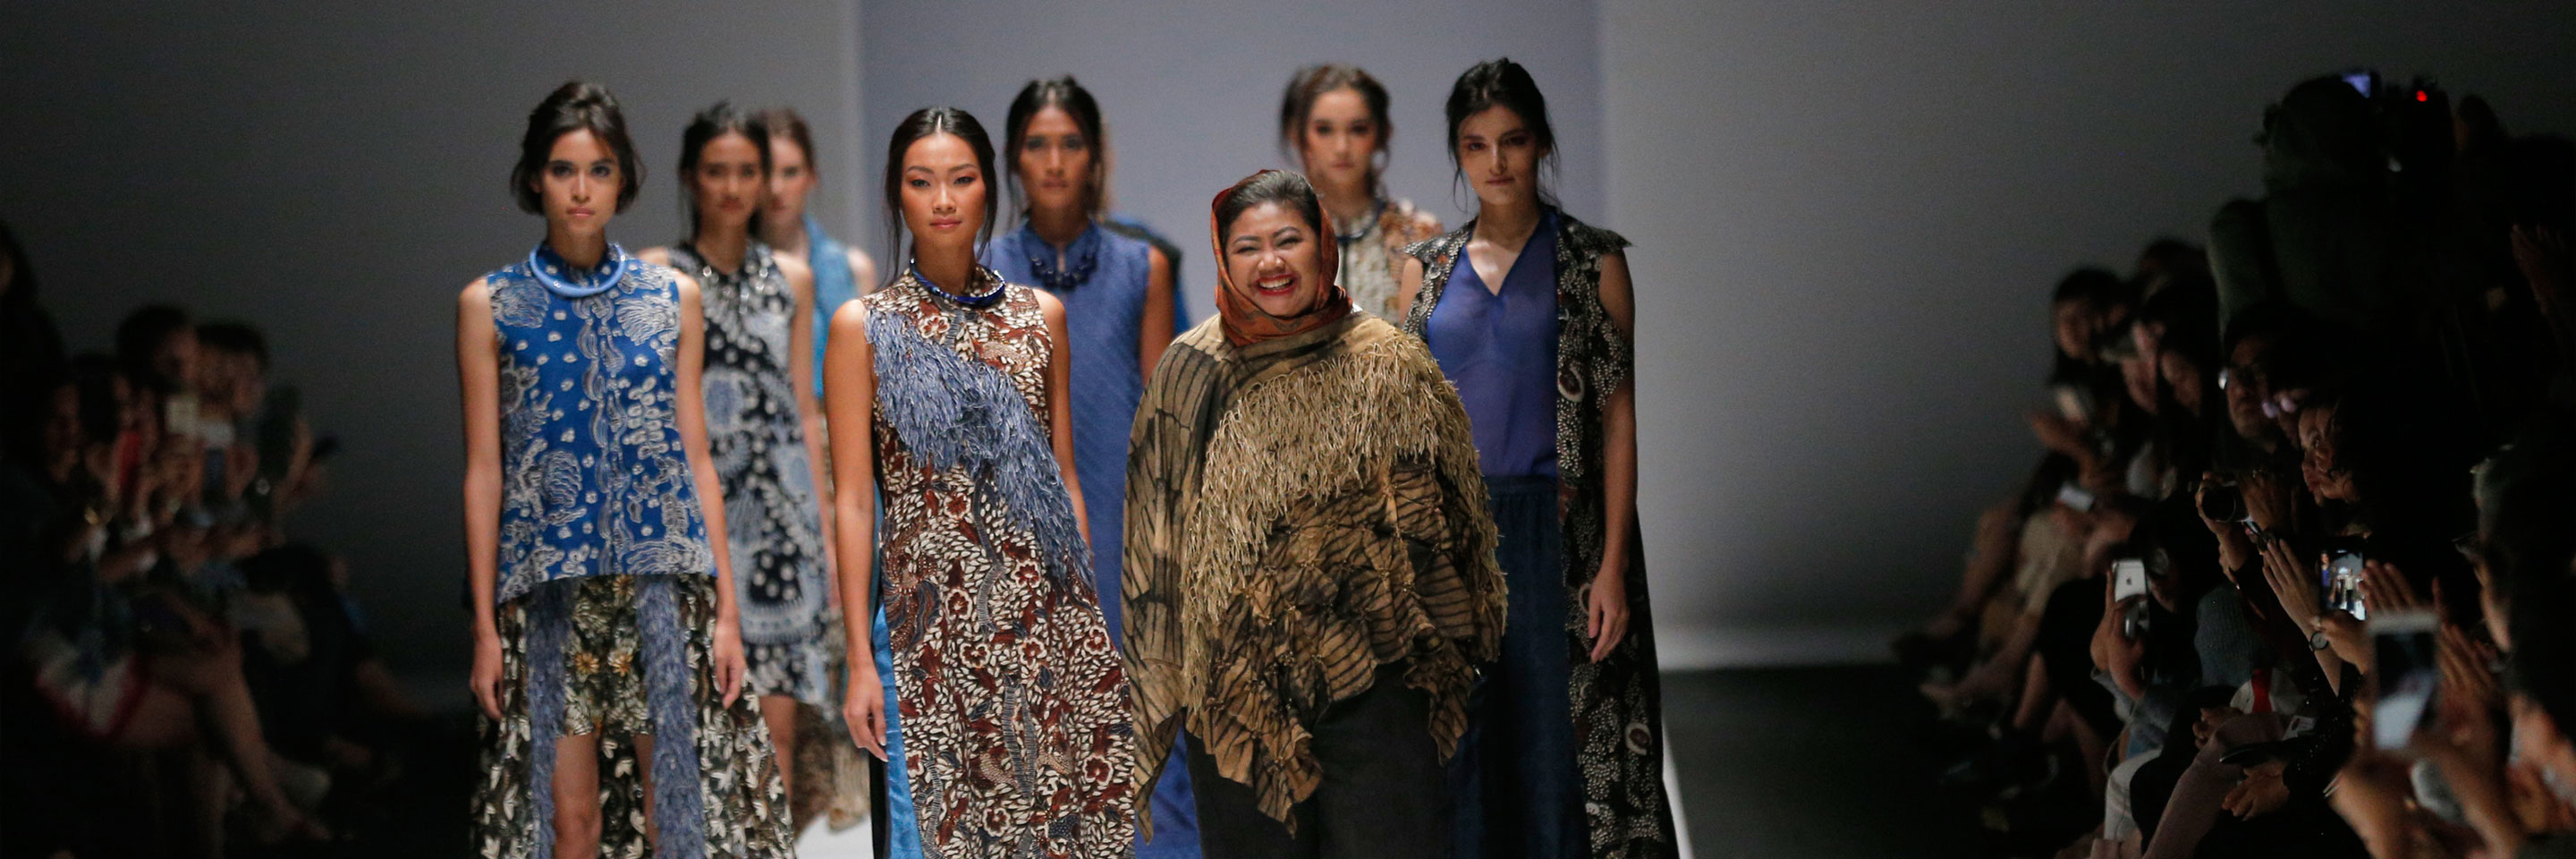 Australian alumna and fashion designer Novita Yunus showcases Indonesian and Australian flora in her striking new Batik Chic Bush collection at the Jakarta Fashion Week 2018.